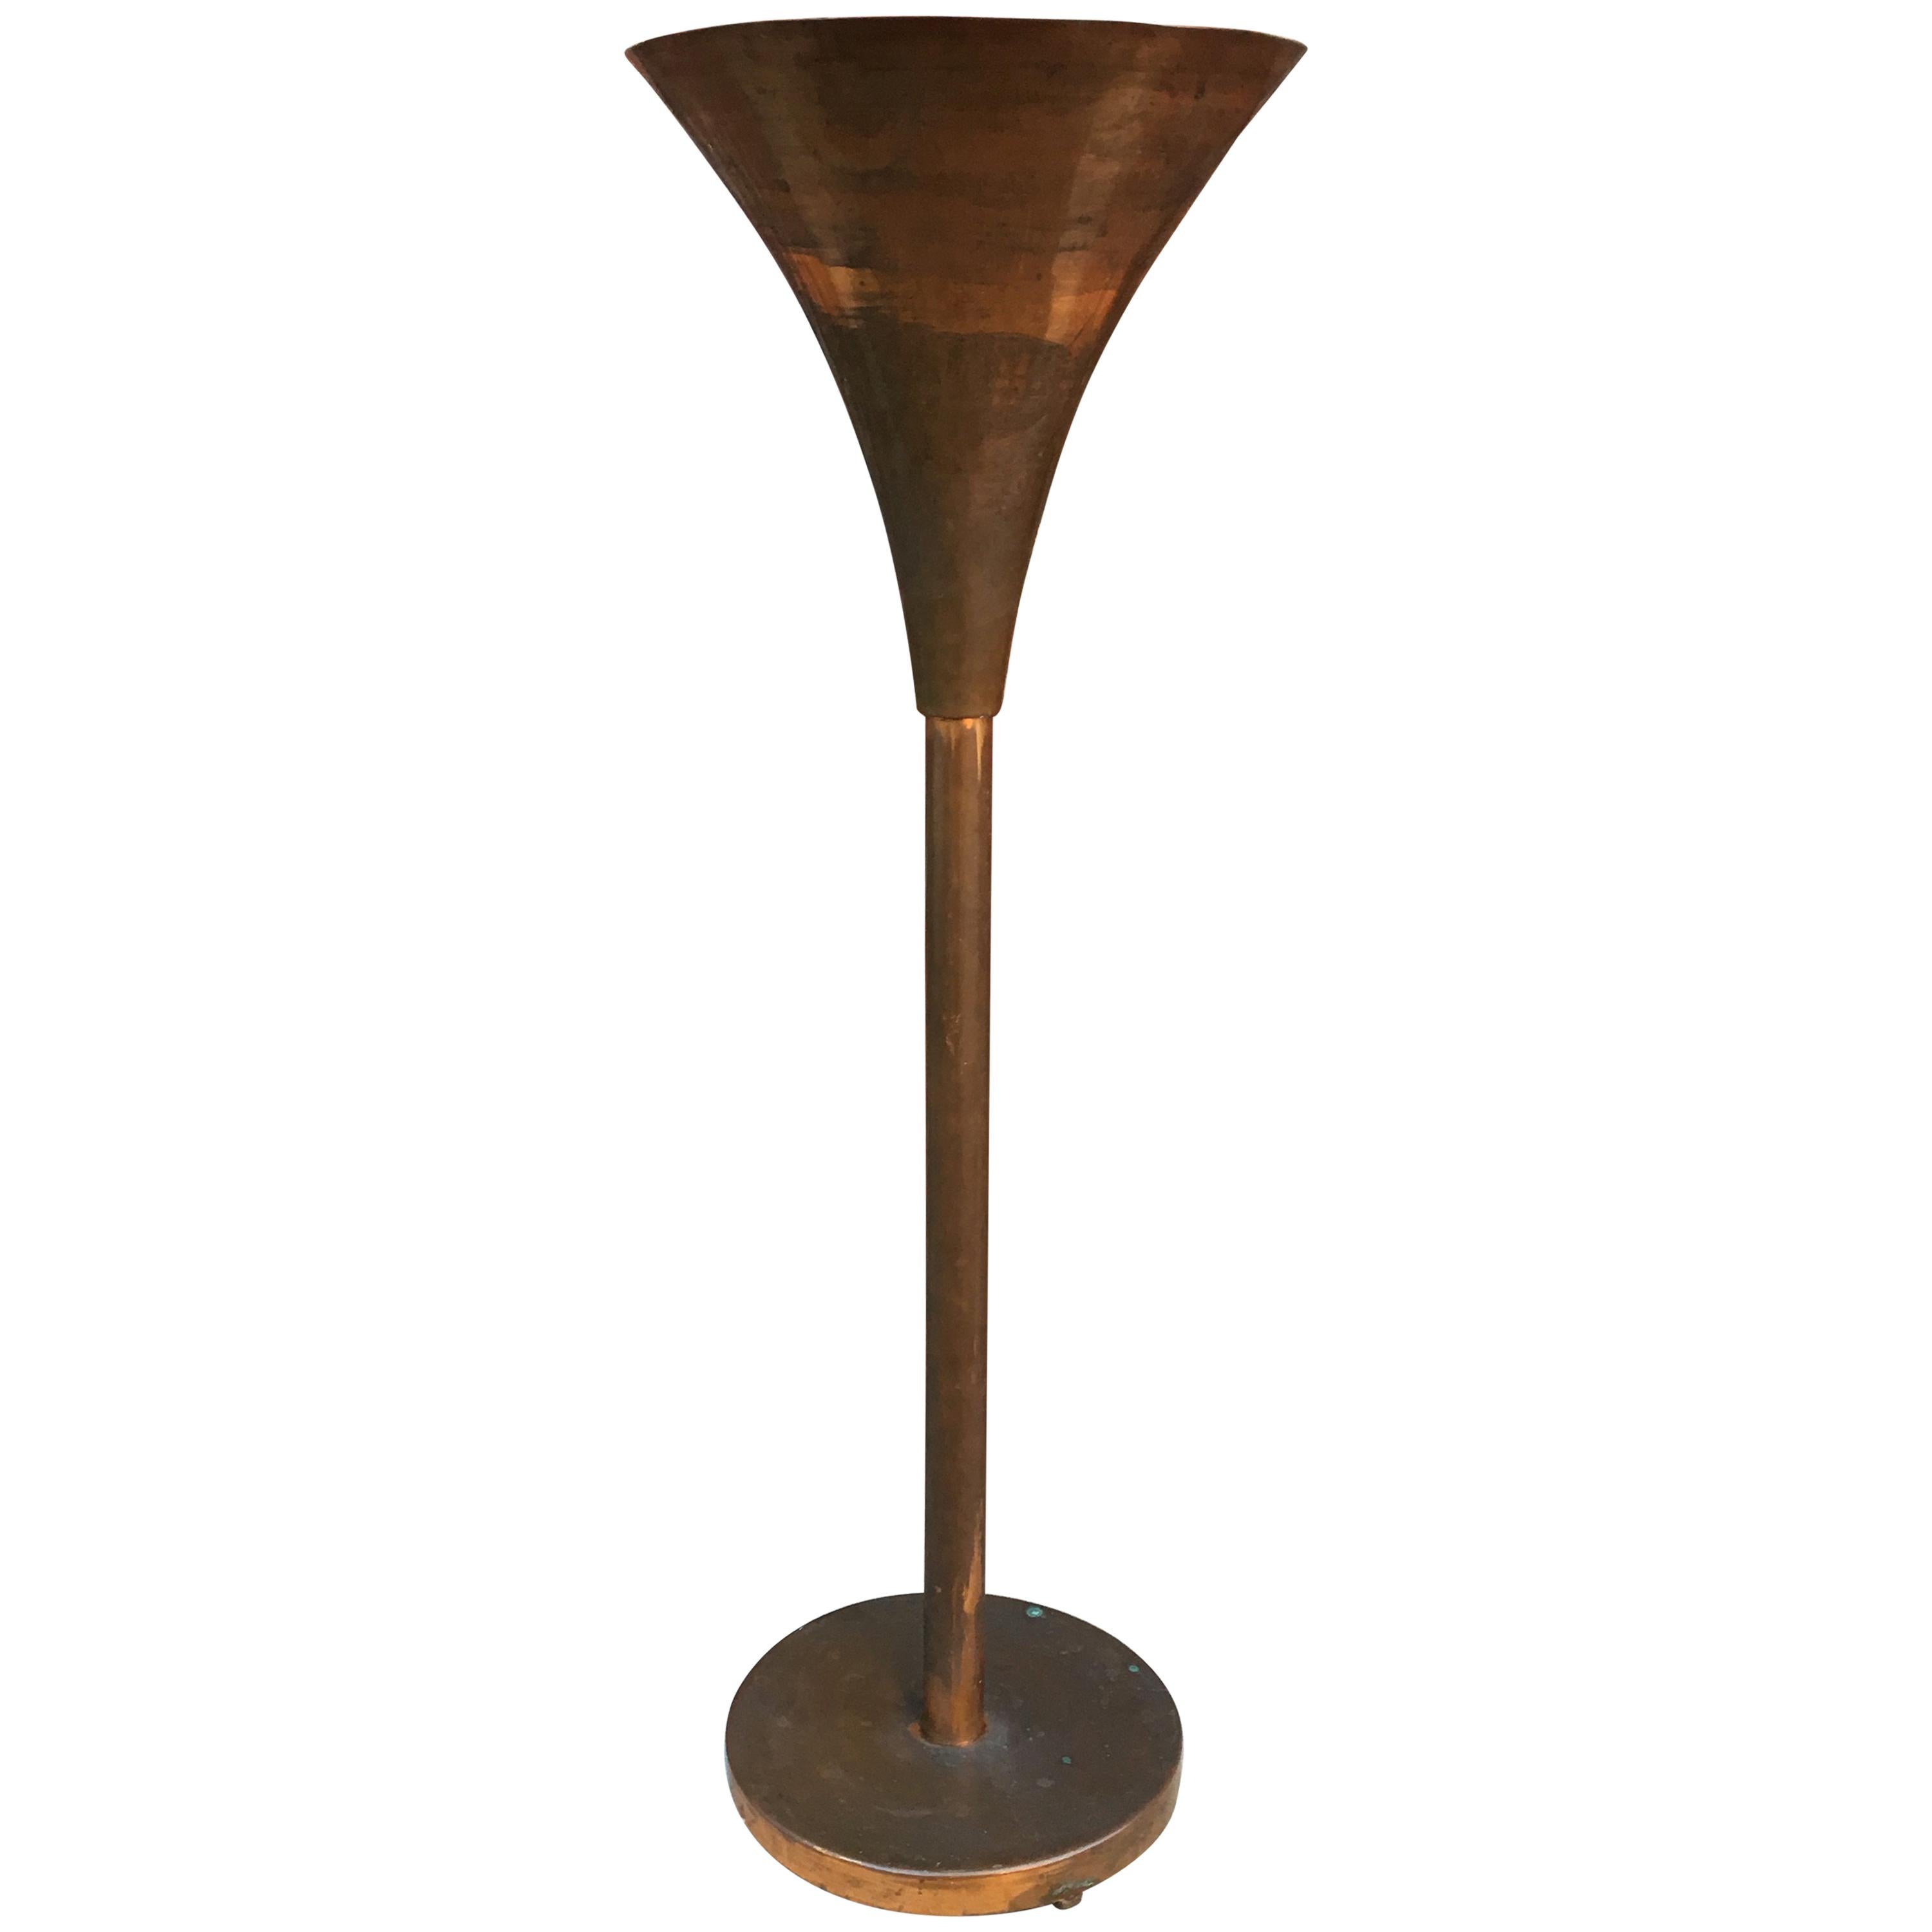 Robert Mallet Stevens, Modernist Lamp, Art Deco Period, circa 1925-1930 For Sale